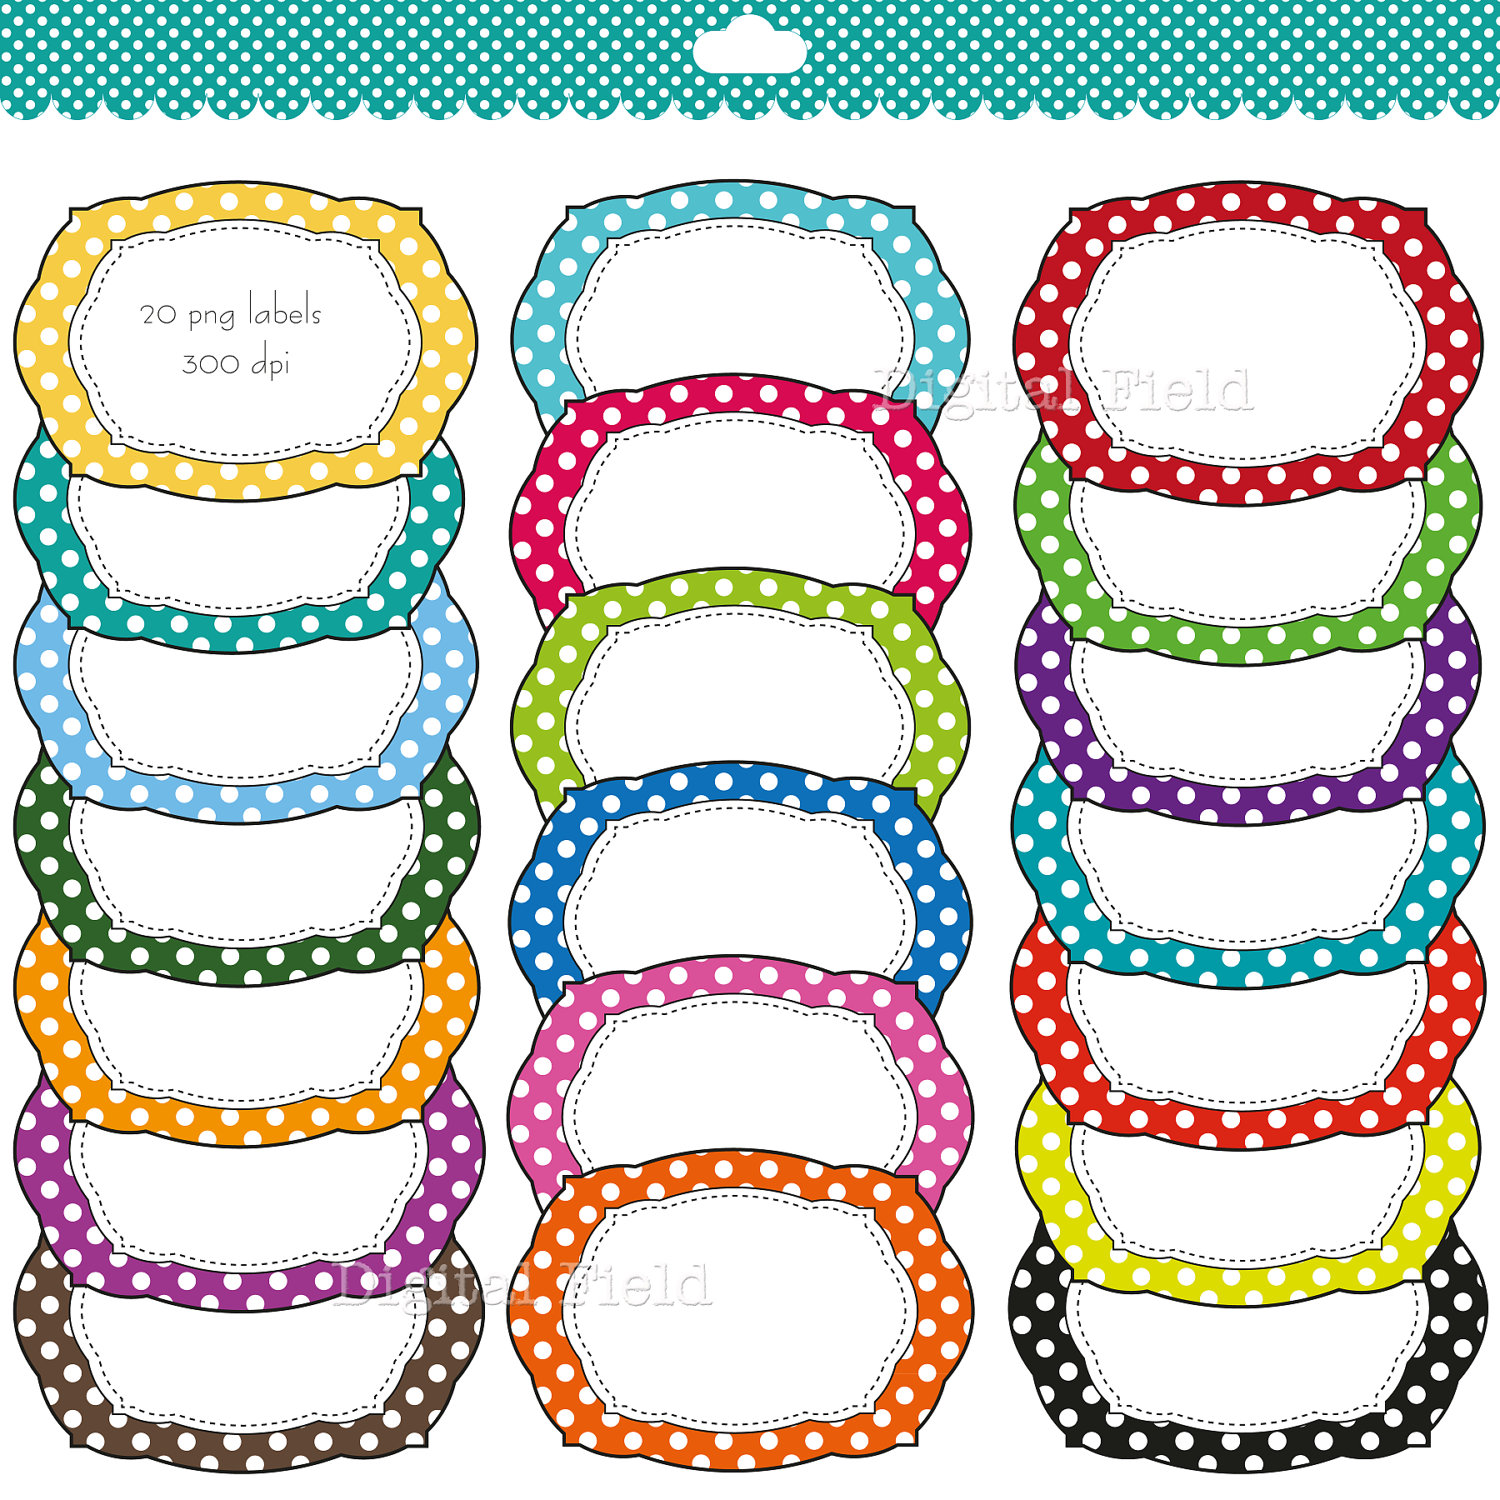 Colorful polka dot labels clip art set printable by digitalfield